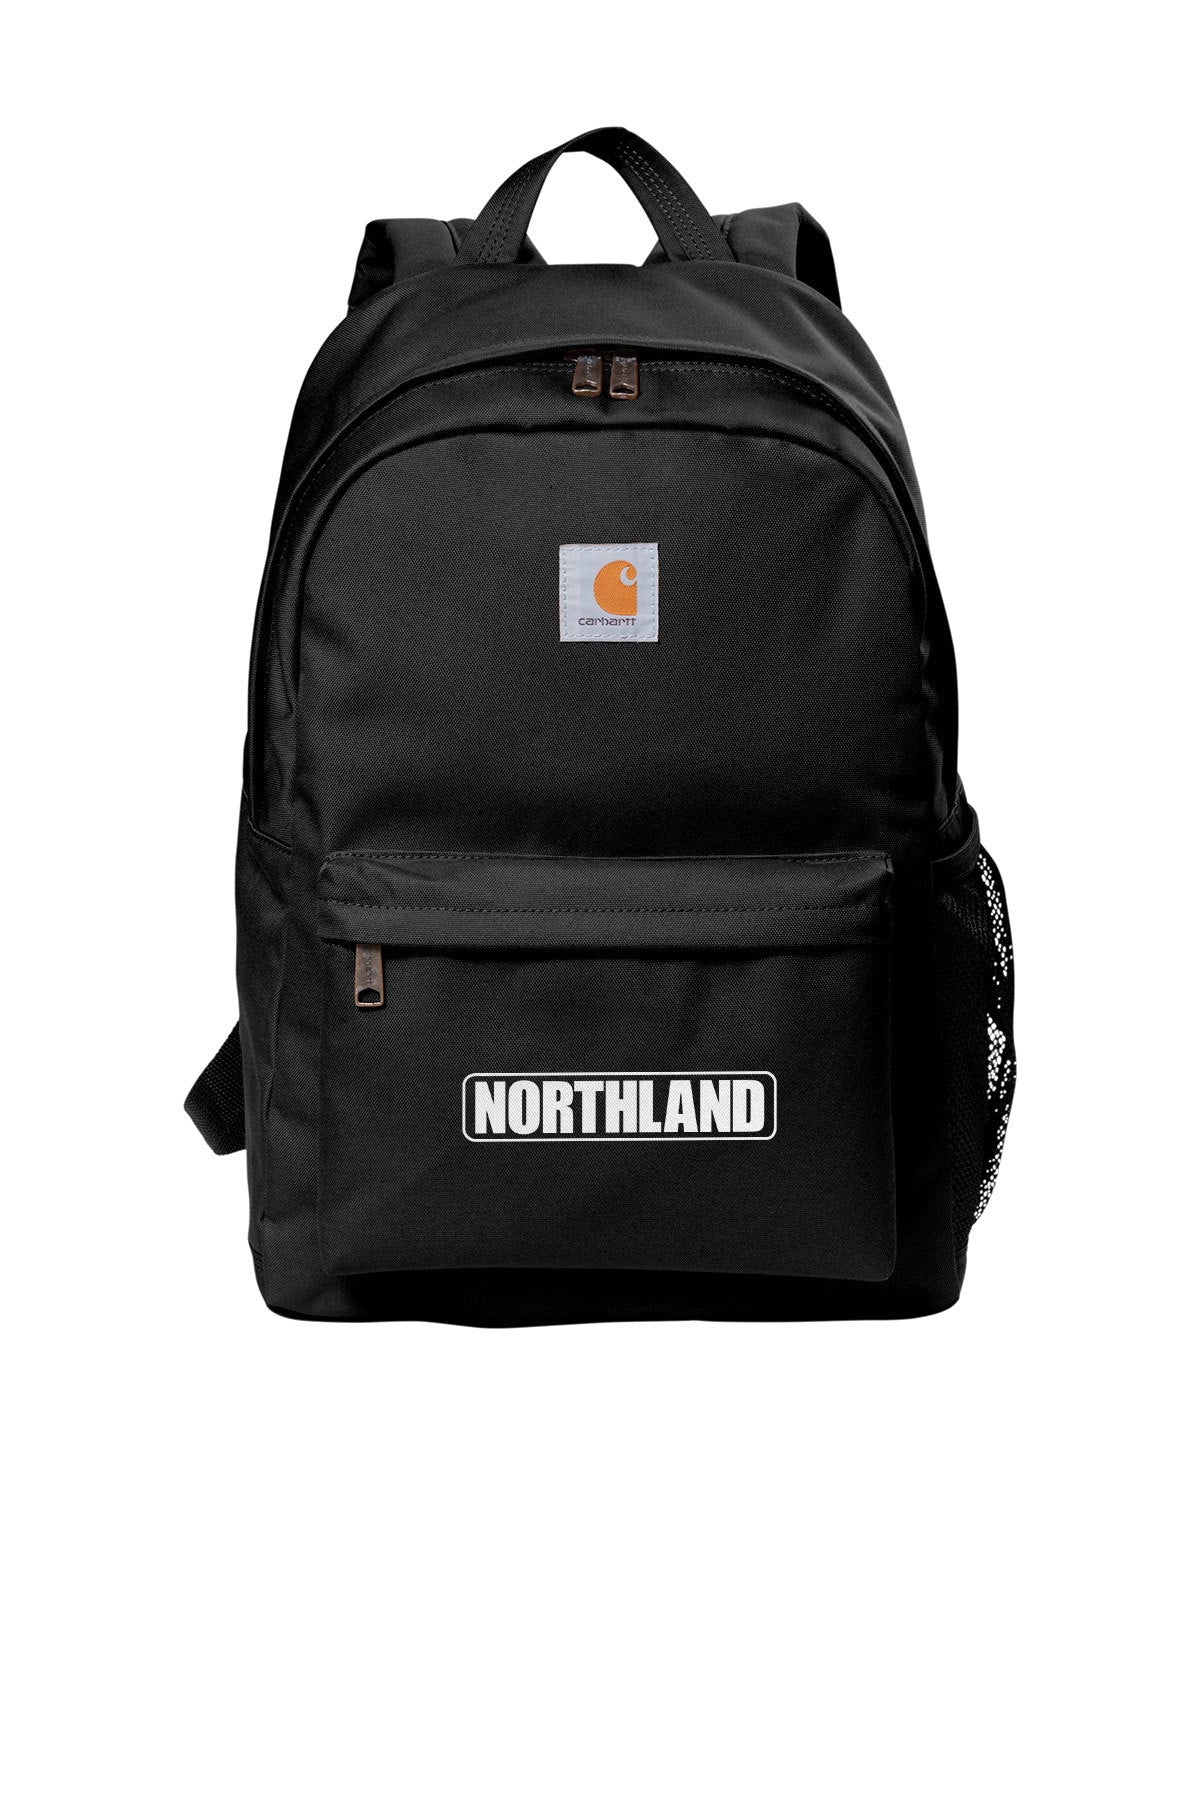 Northland Constructors Carhartt Canvas Backpack